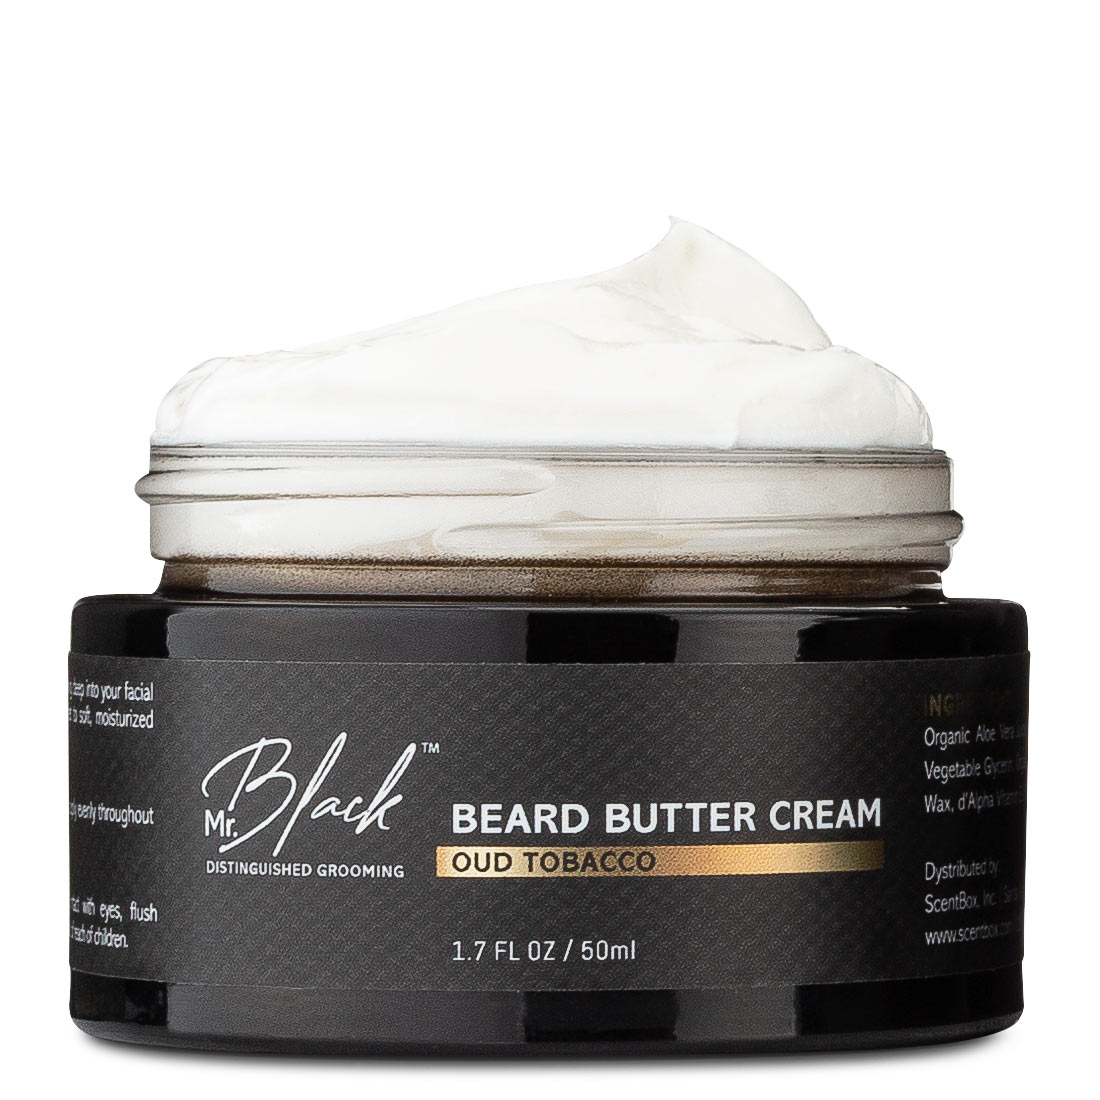 Beard Butter Cream - Oud Tobacco Mr. Black Image